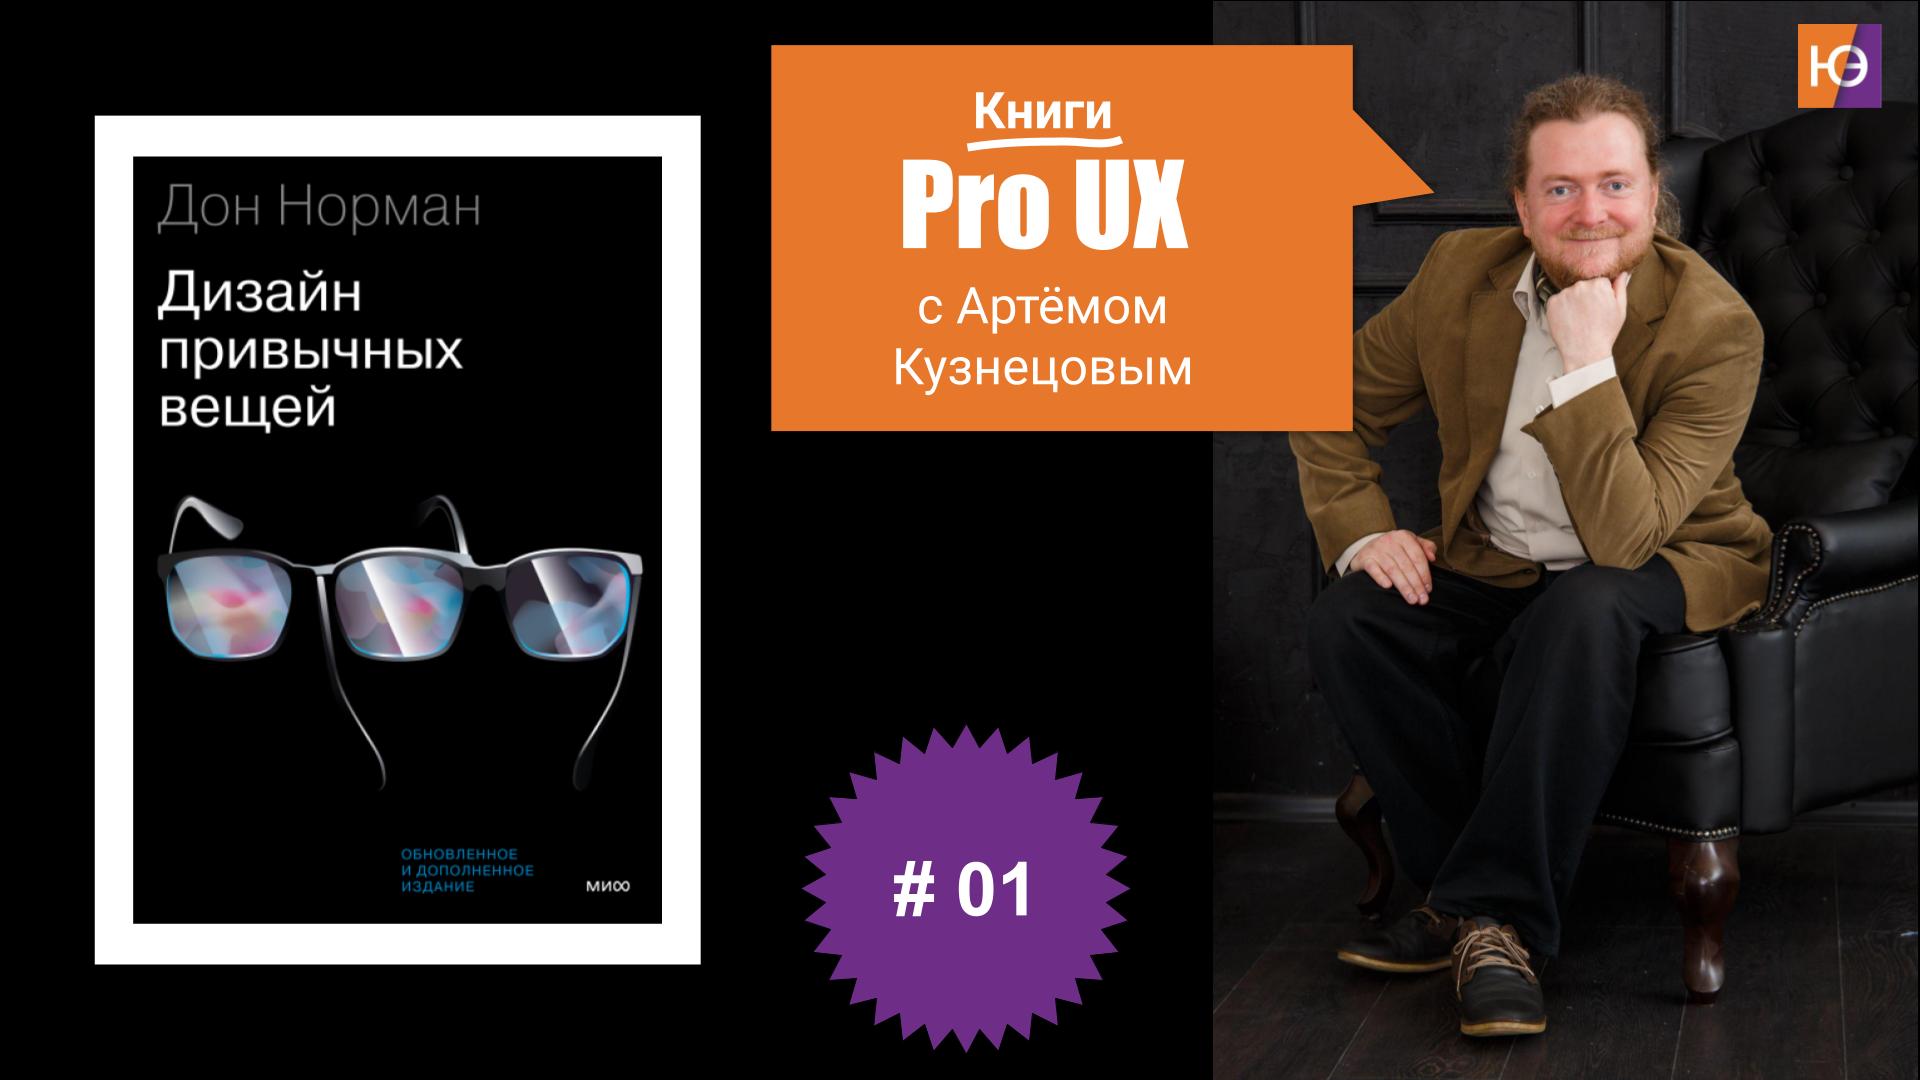 Книги Pro UX c Артёмом Кузнецовым #1 – Дональд Норман “Дизайн привычных вещей”